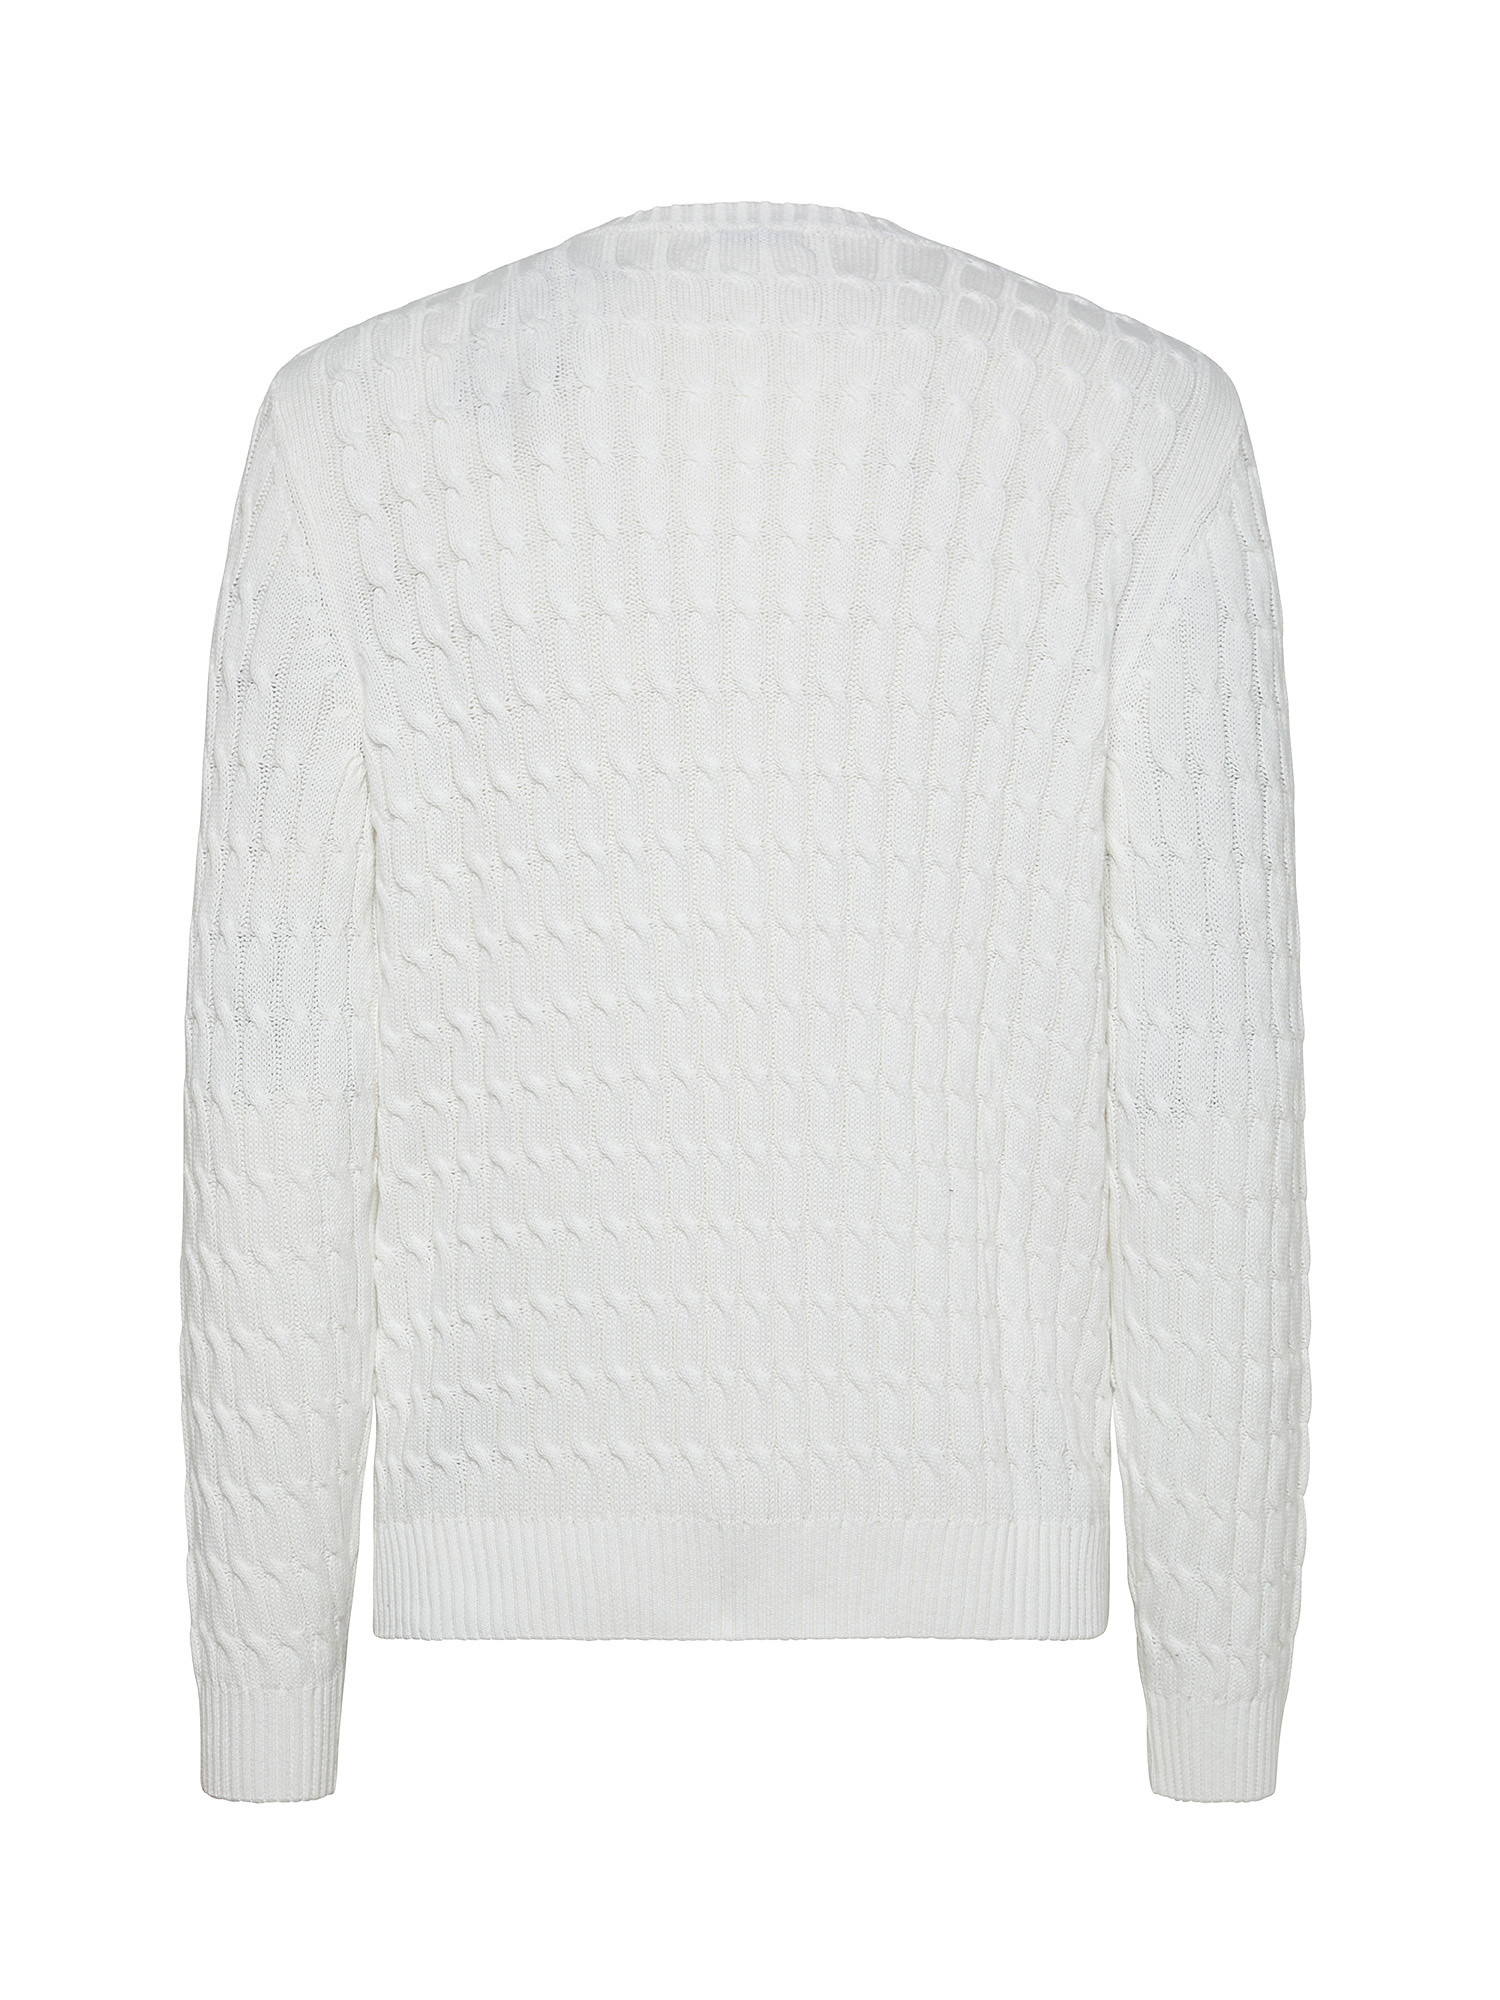 Luca D'Altieri - Crewneck sweater with pure cotton braids, White, large image number 1